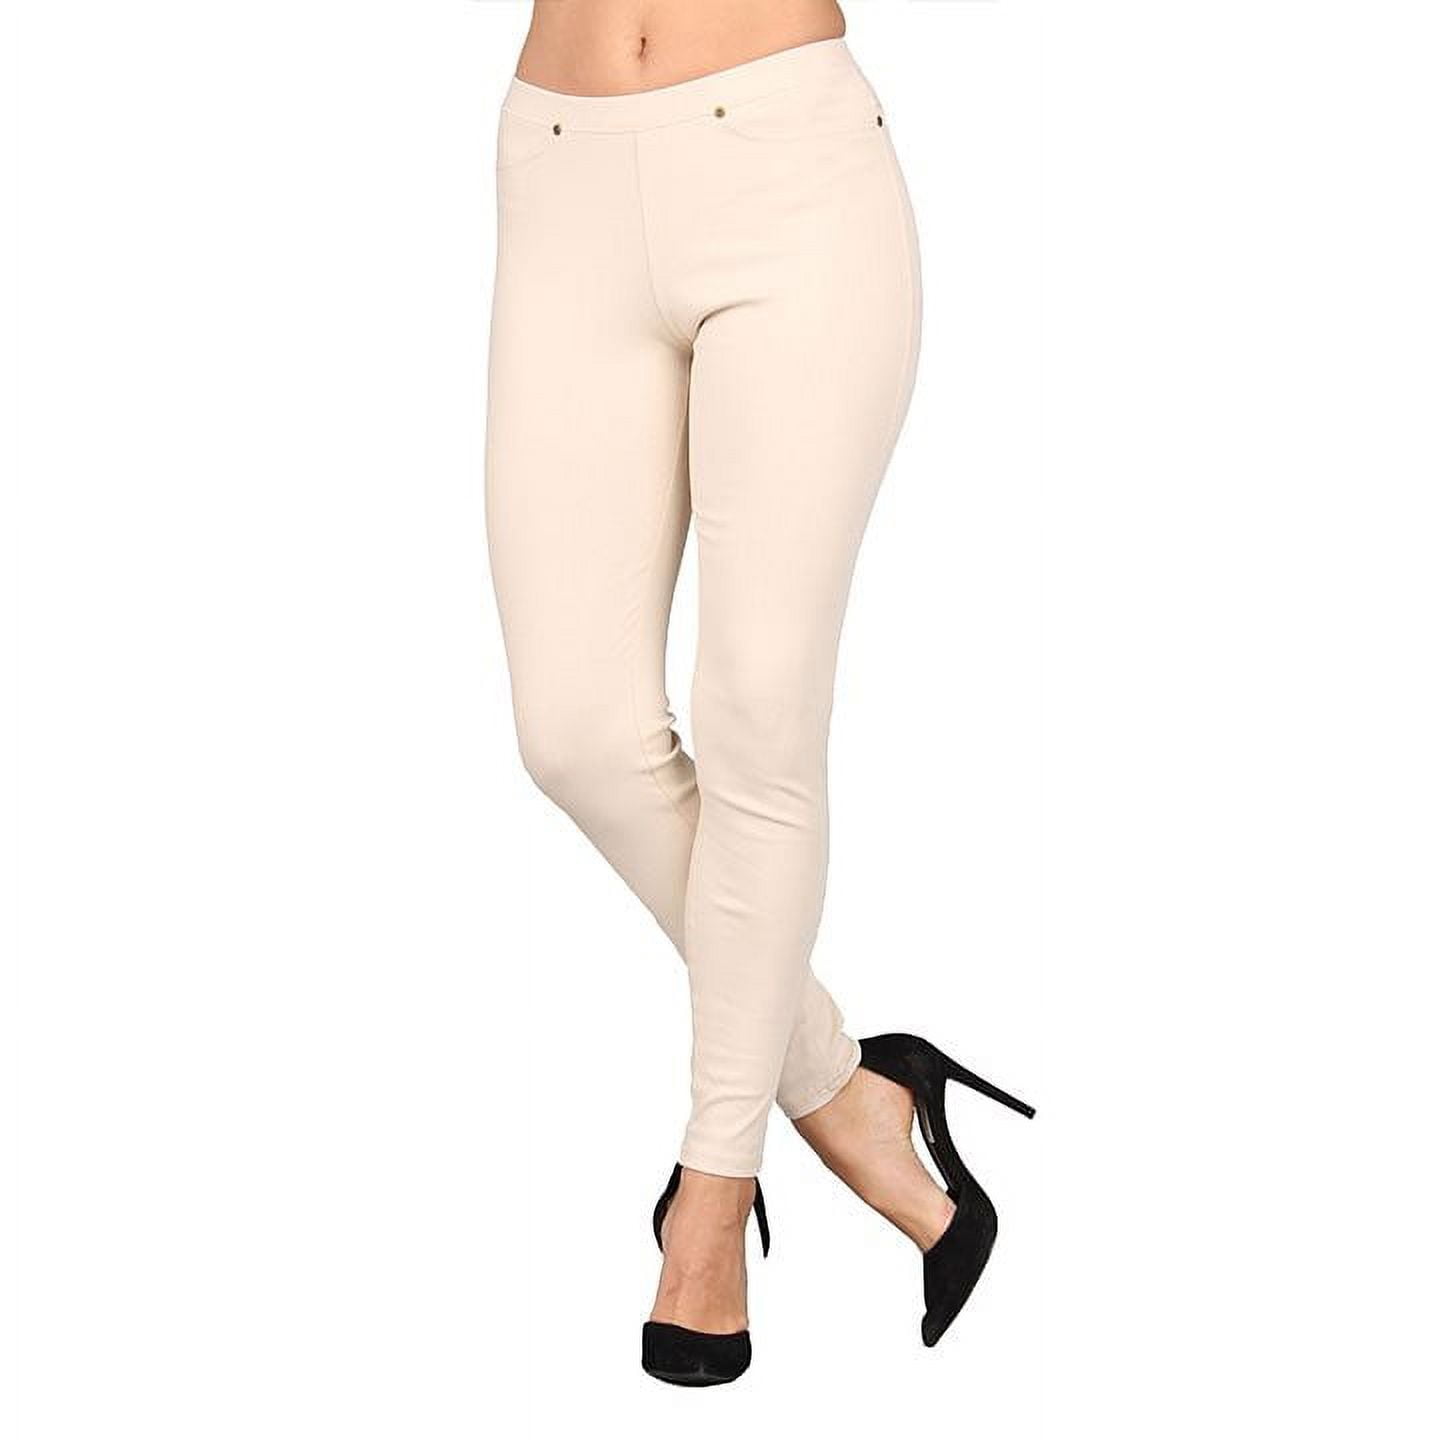 Buy online Women's Plain Slim Fit Jeans from Jeans & jeggings for